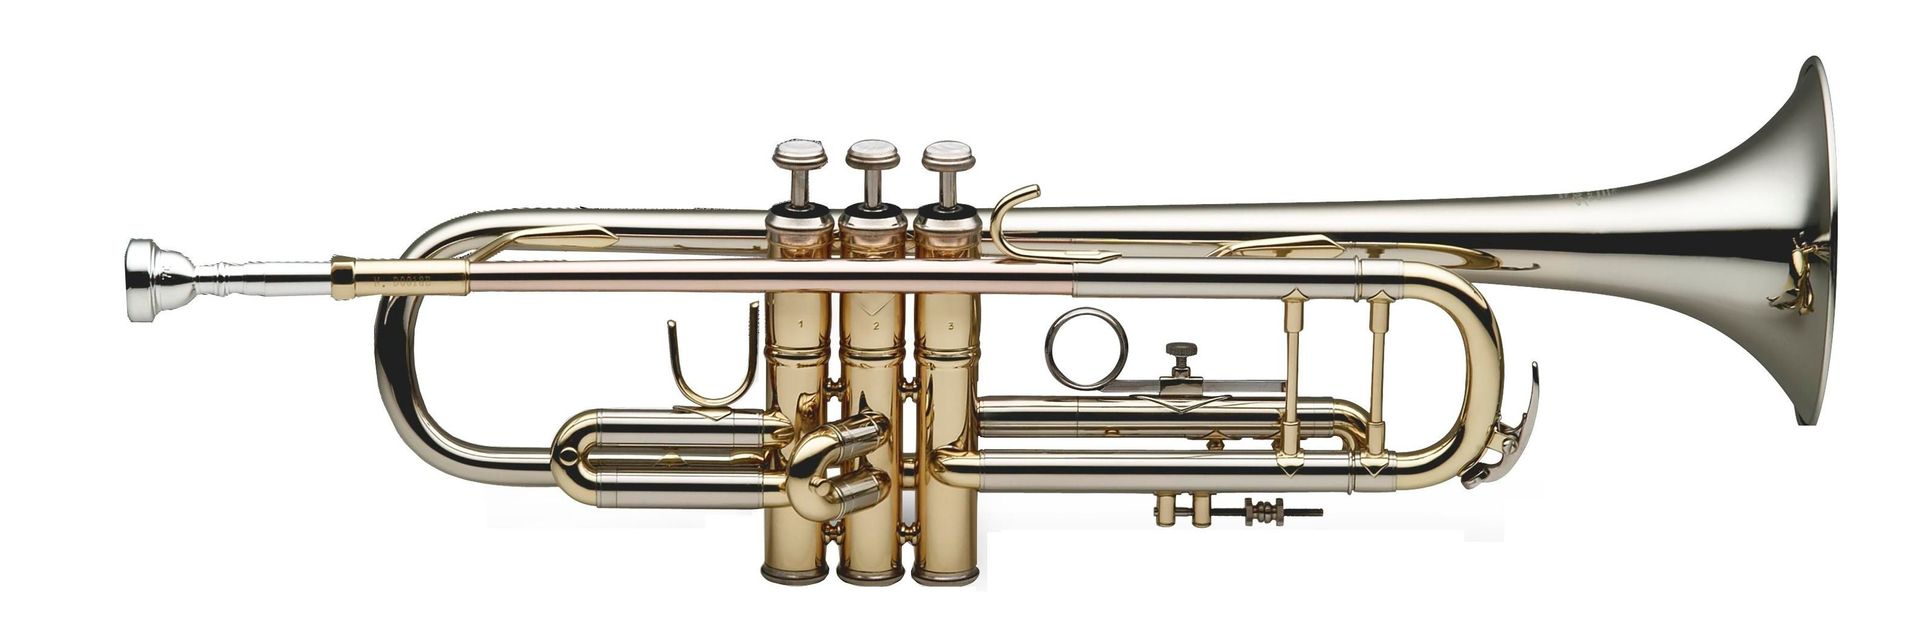 SWING TR 202 NS B Trompete Neusilber Schallbecher lackiert, Bohrung 11,66mm  - Onlineshop Musikhaus Markstein